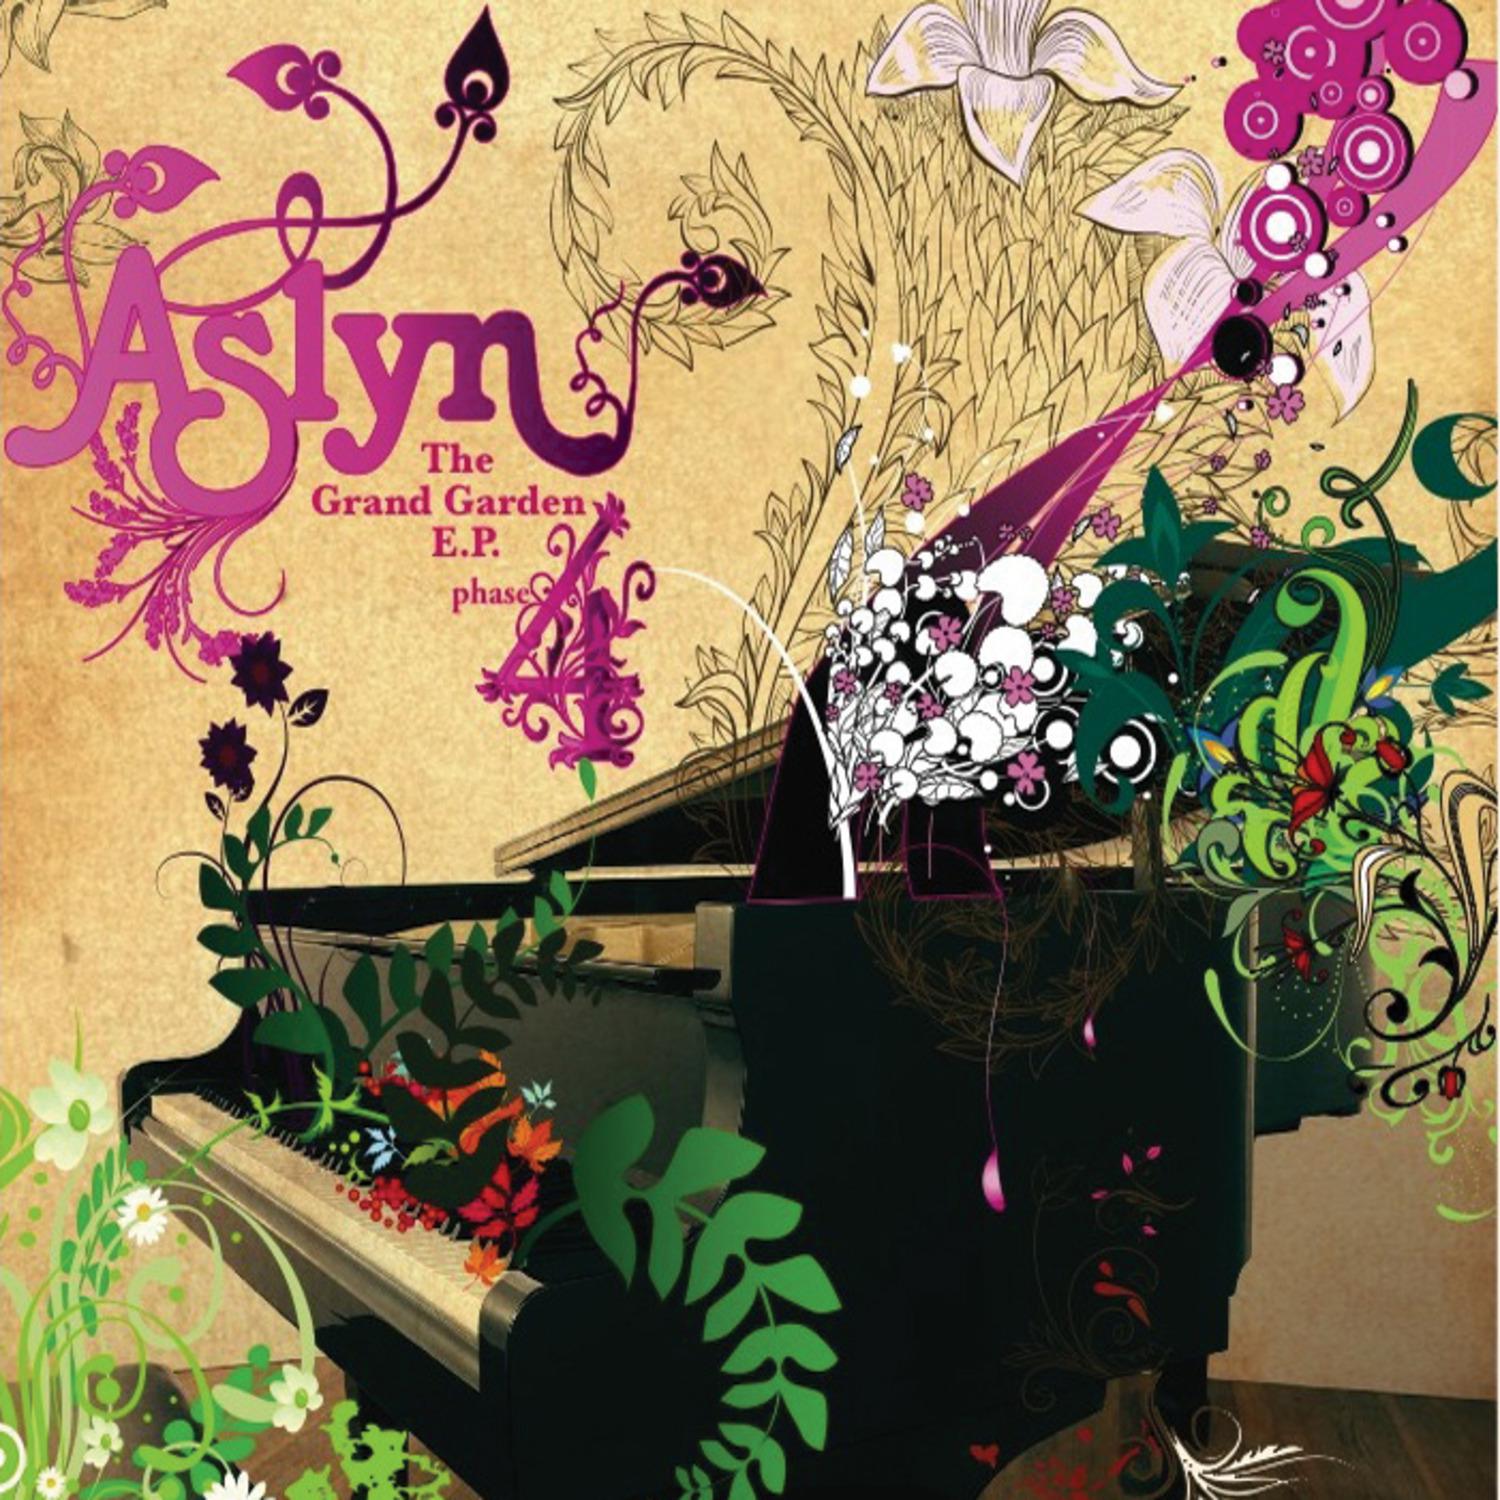 Aslyn - Rosemary